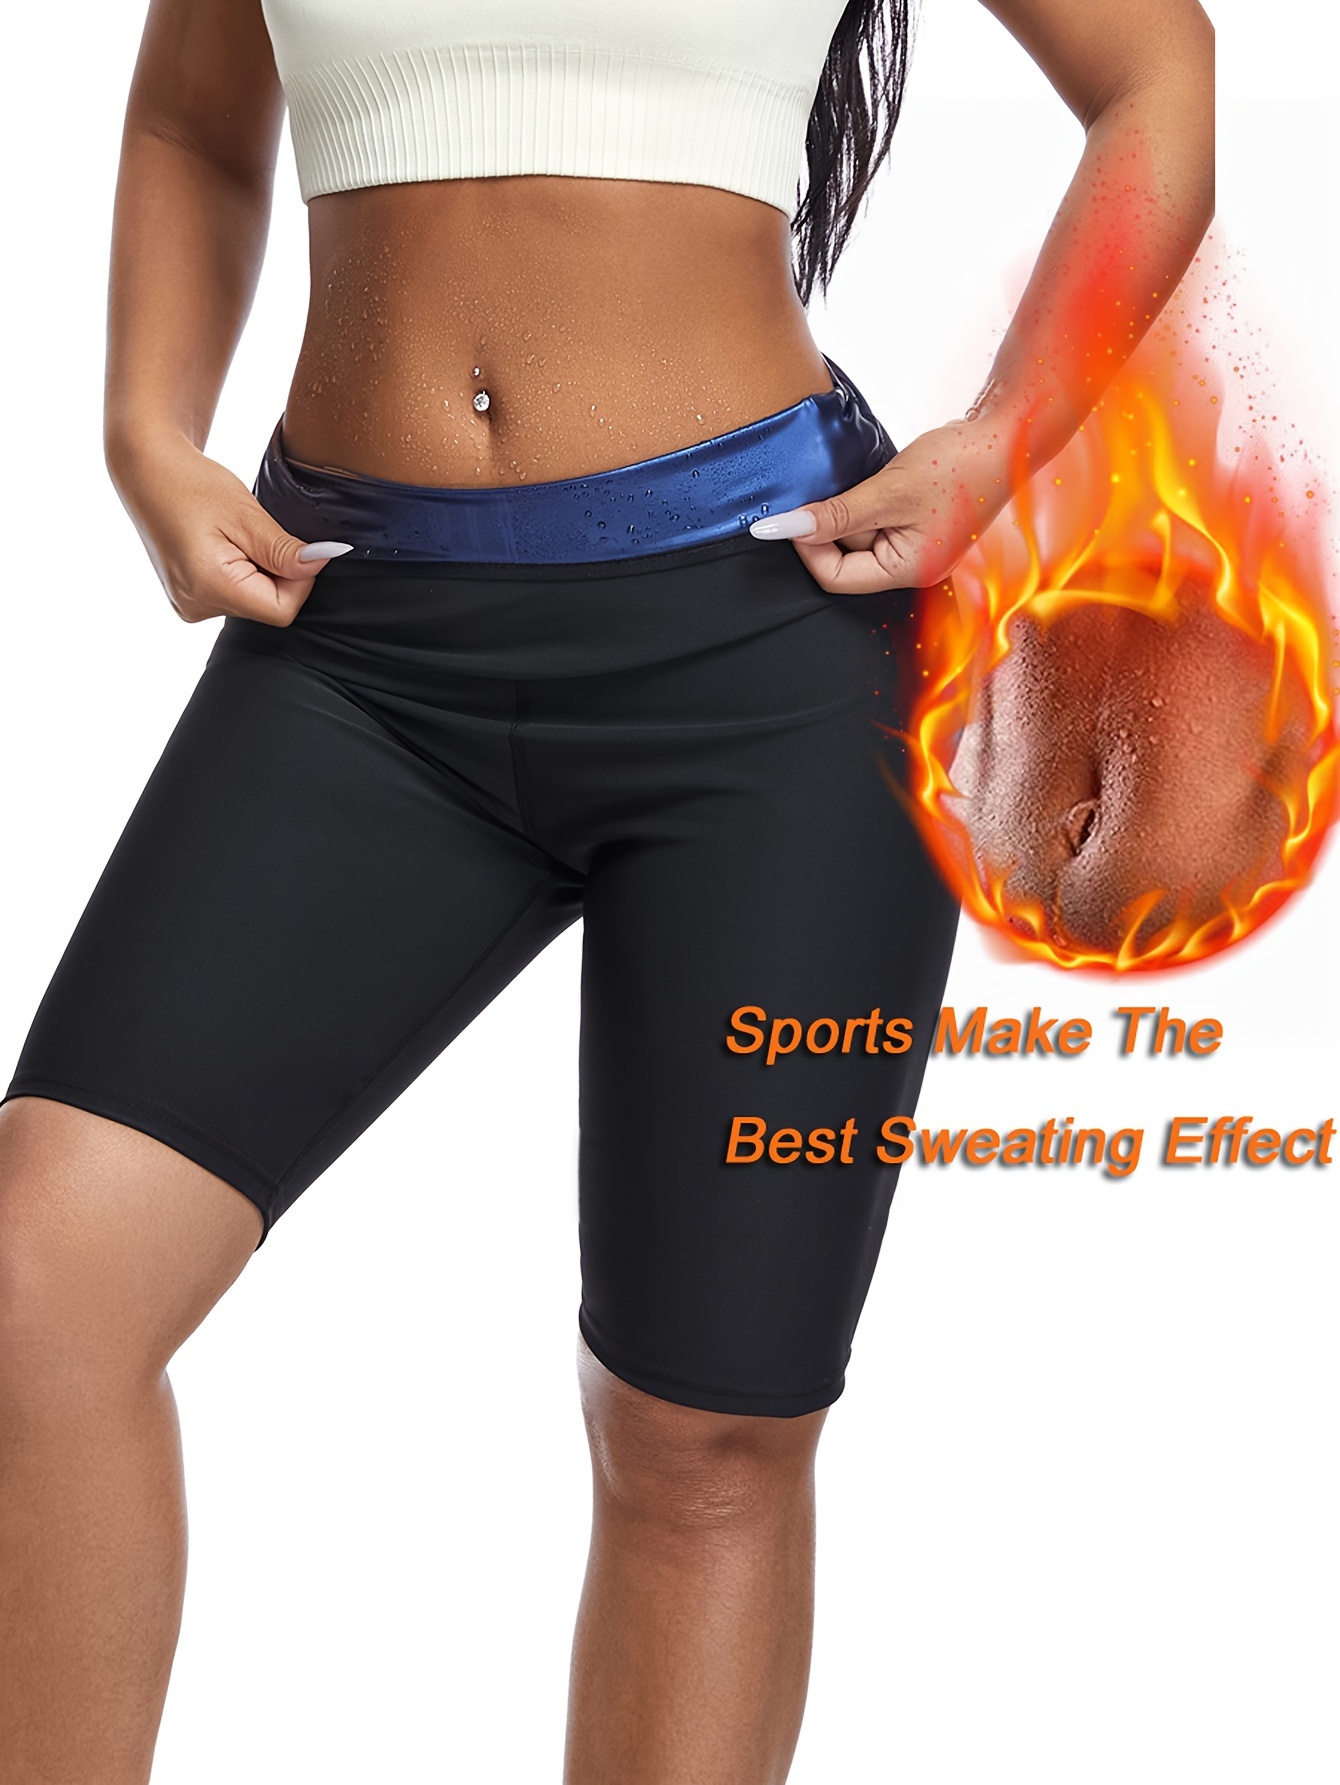  BODYSUNER Sauna Shorts Sweat Pants Waist Trainer for